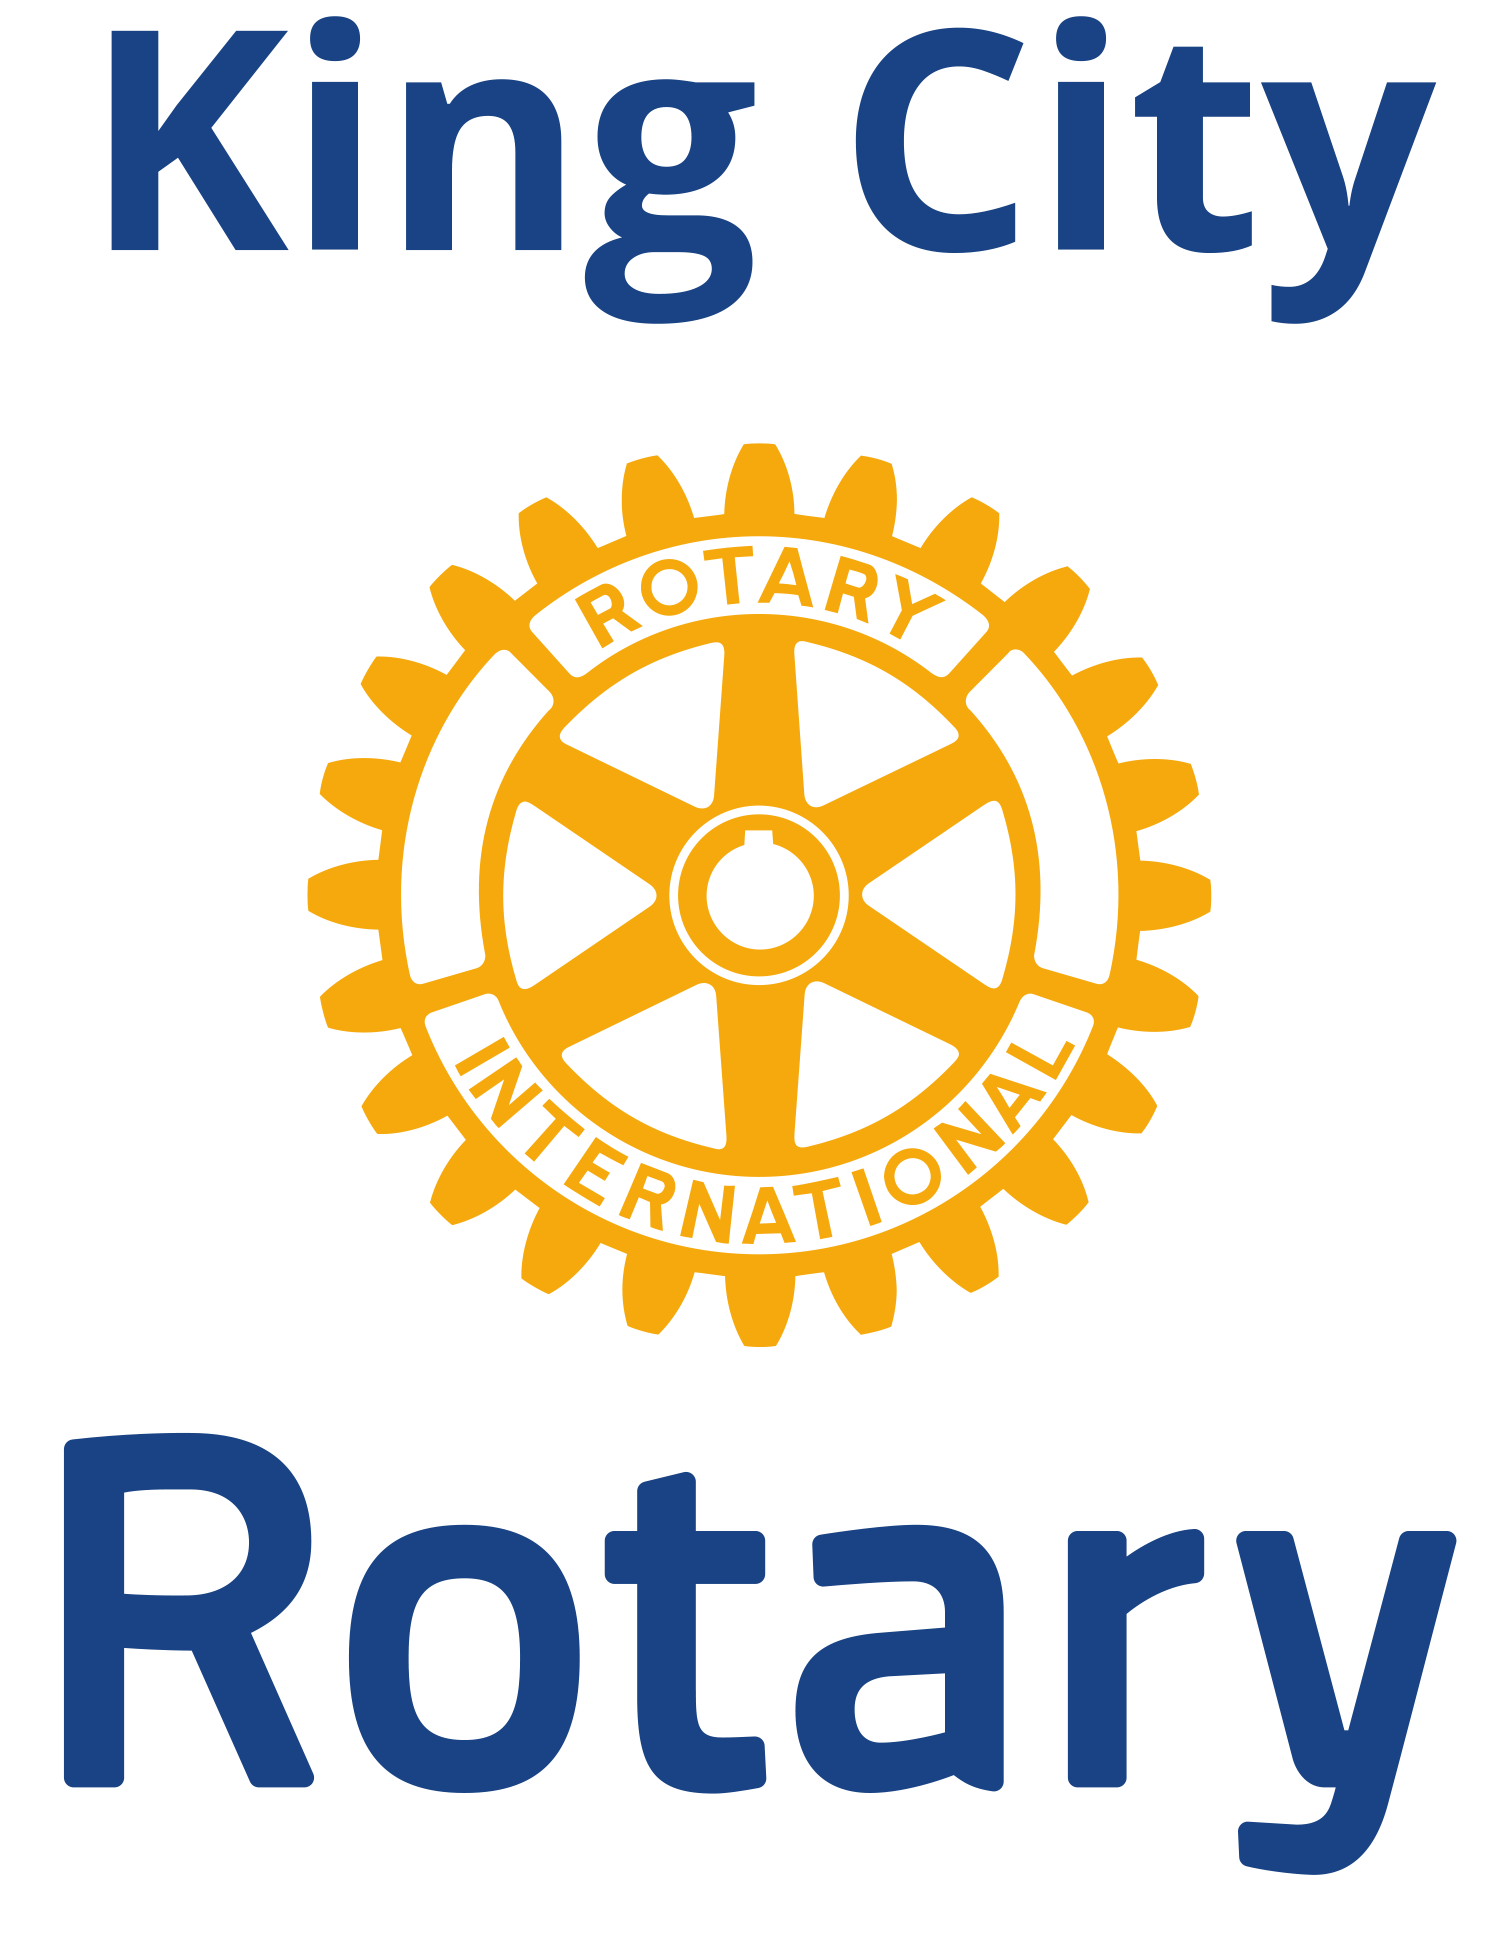 King City Rotary Club Logo